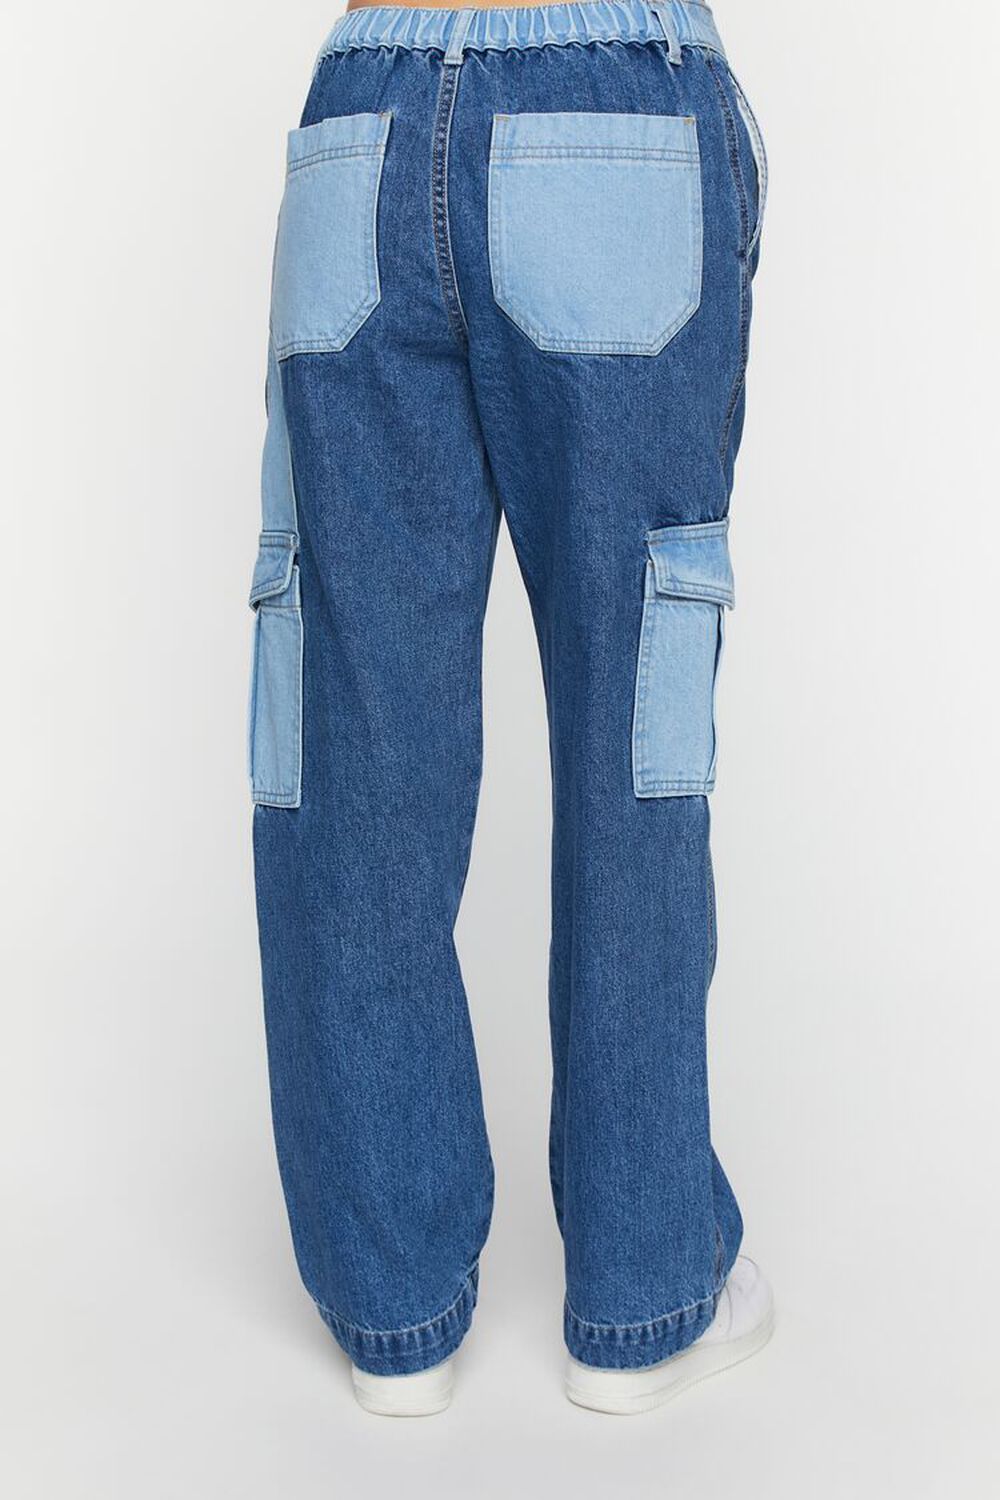 MEDIUM DENIM/DENIM Reworked Straight-Leg Cargo Jeans, image 3